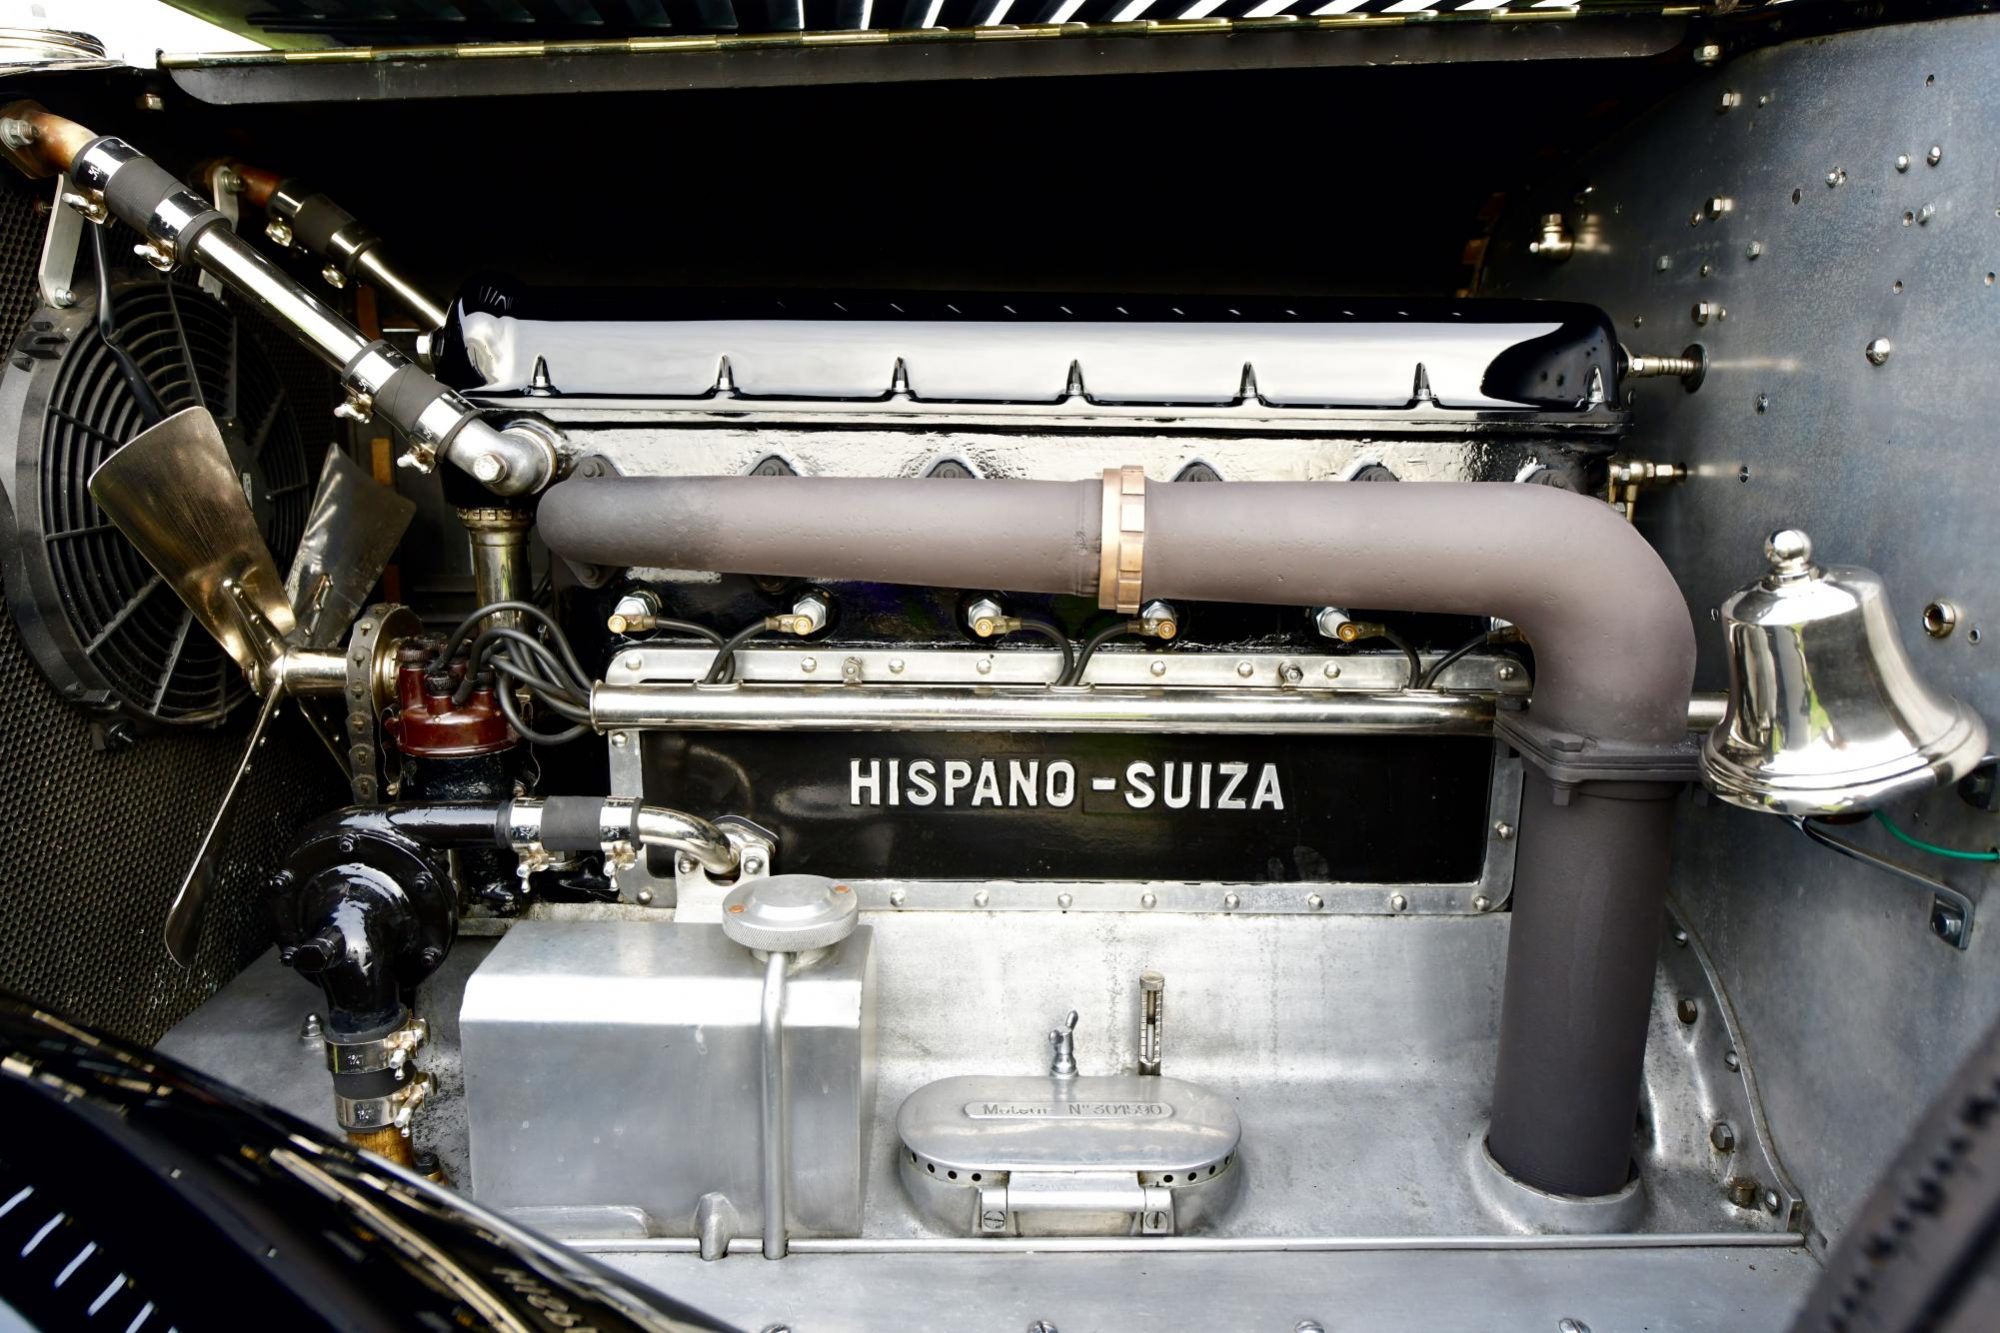 Hispano Suiza, Hispano Suiza H6B, H6B, coachbuilt car, Hispano Suiza engine